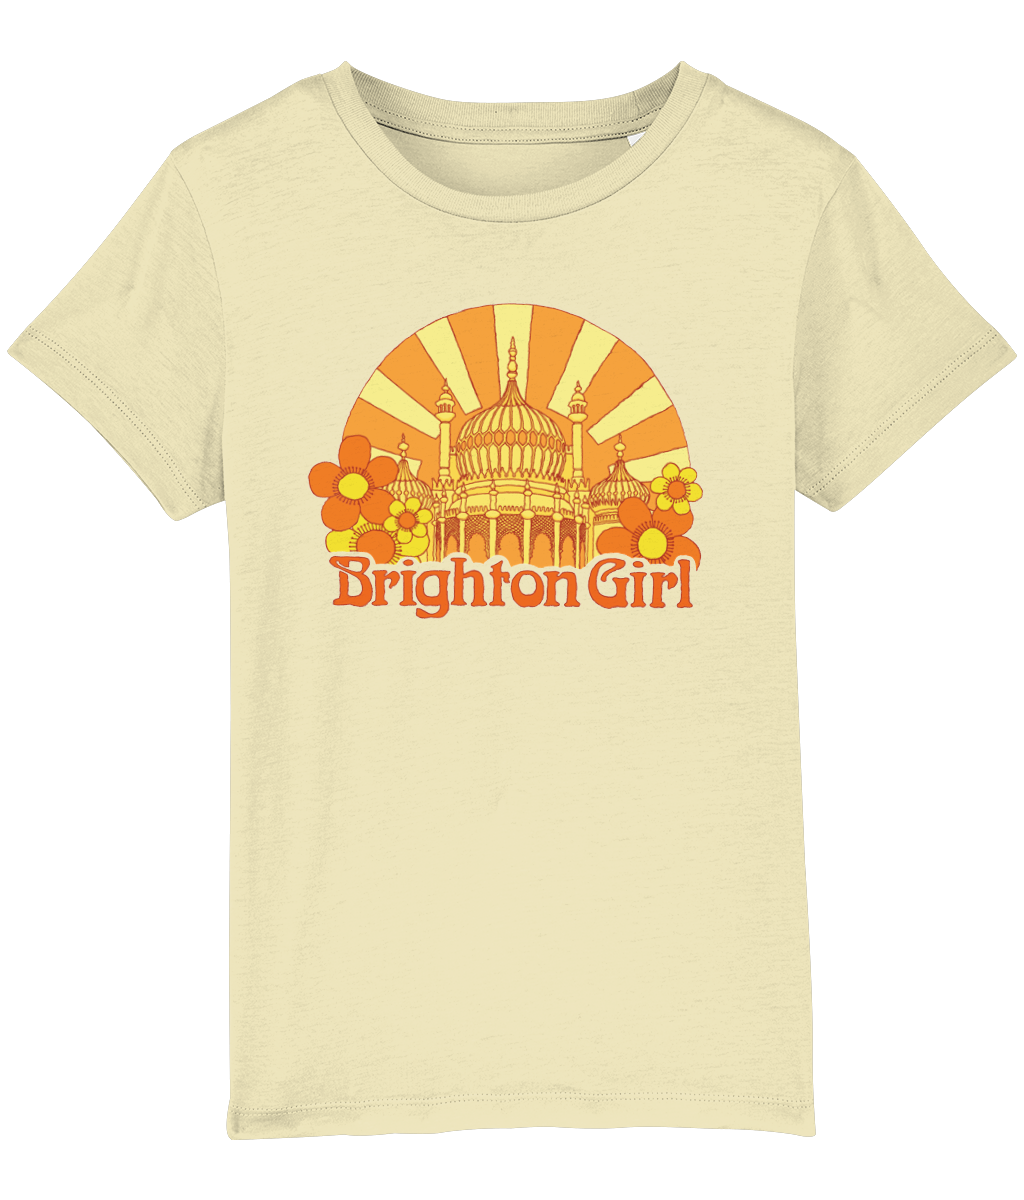 Brighton Girl Teeshirt - Laura Backeberg design (Kids Size)